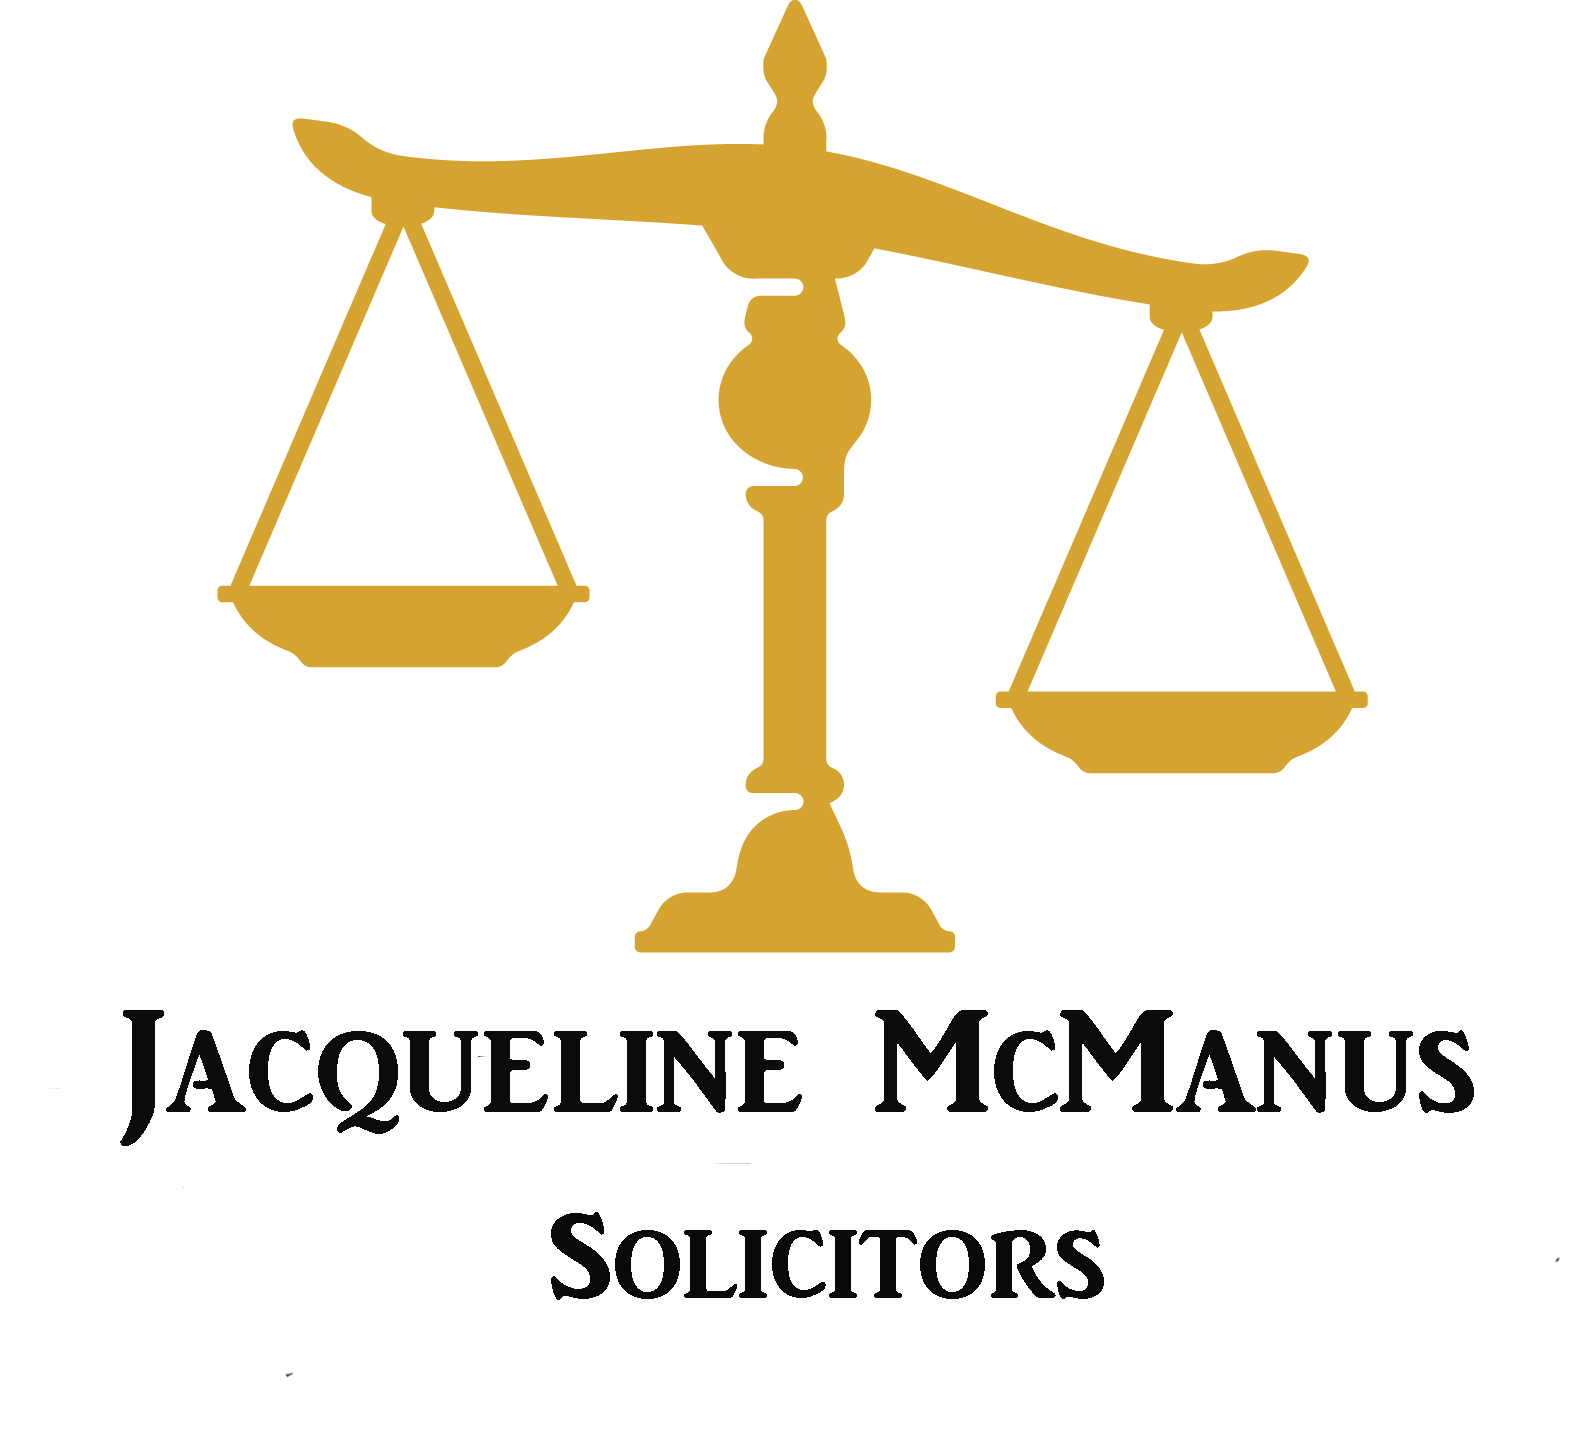 Jackie McManus Solicitors